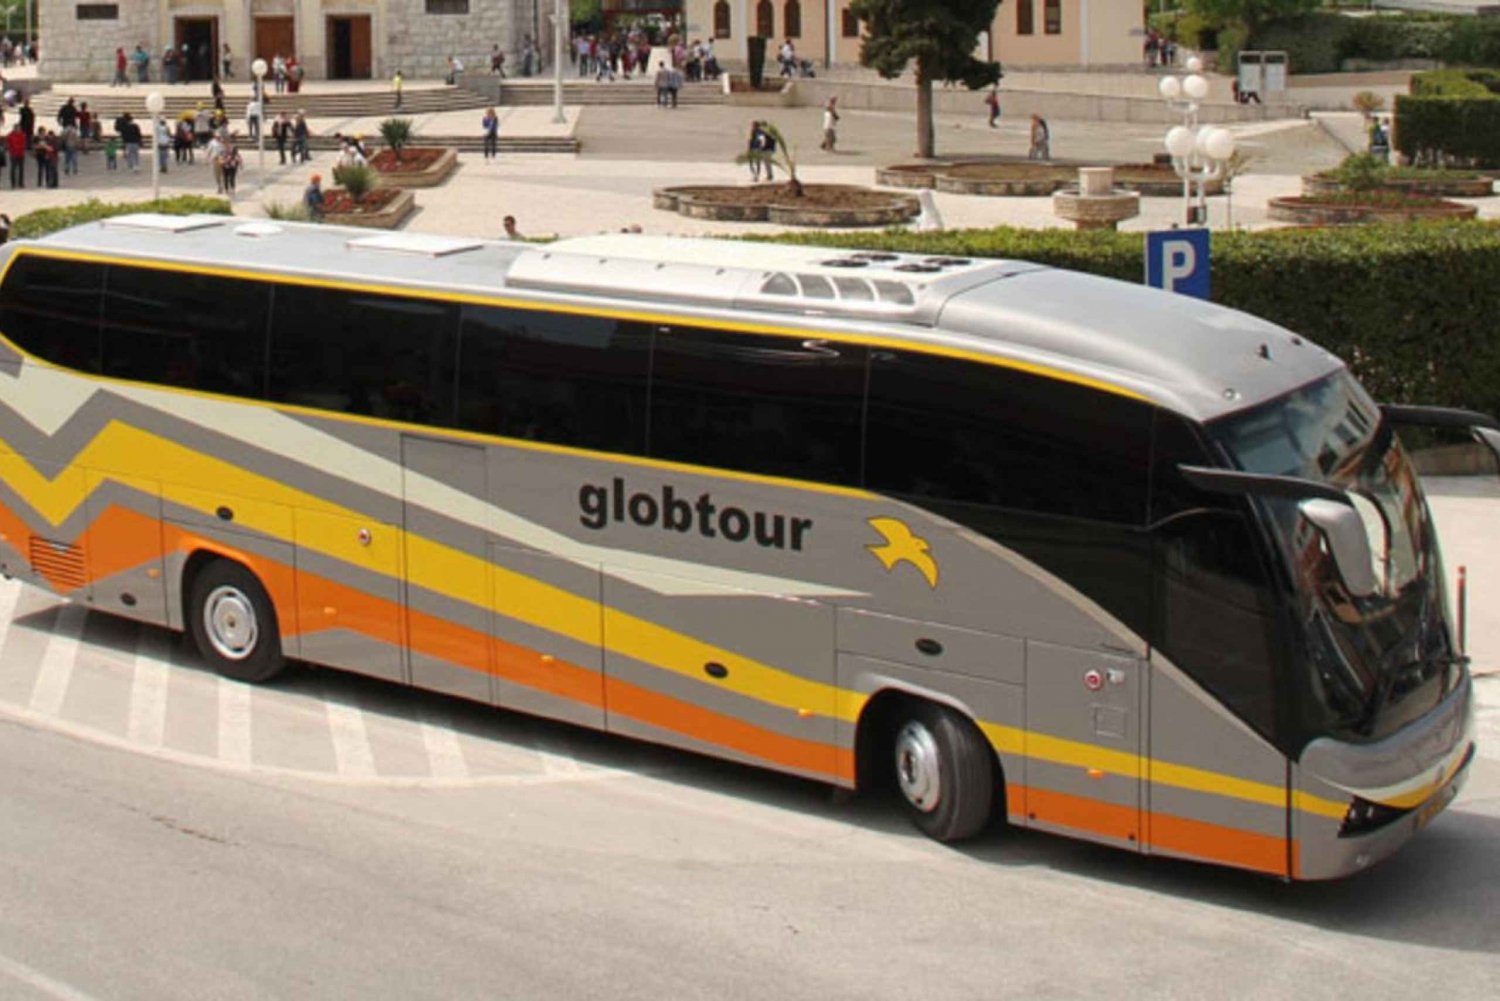 Llegar a Dubrovnik desde Kotor o viceversa en autobuses modernos